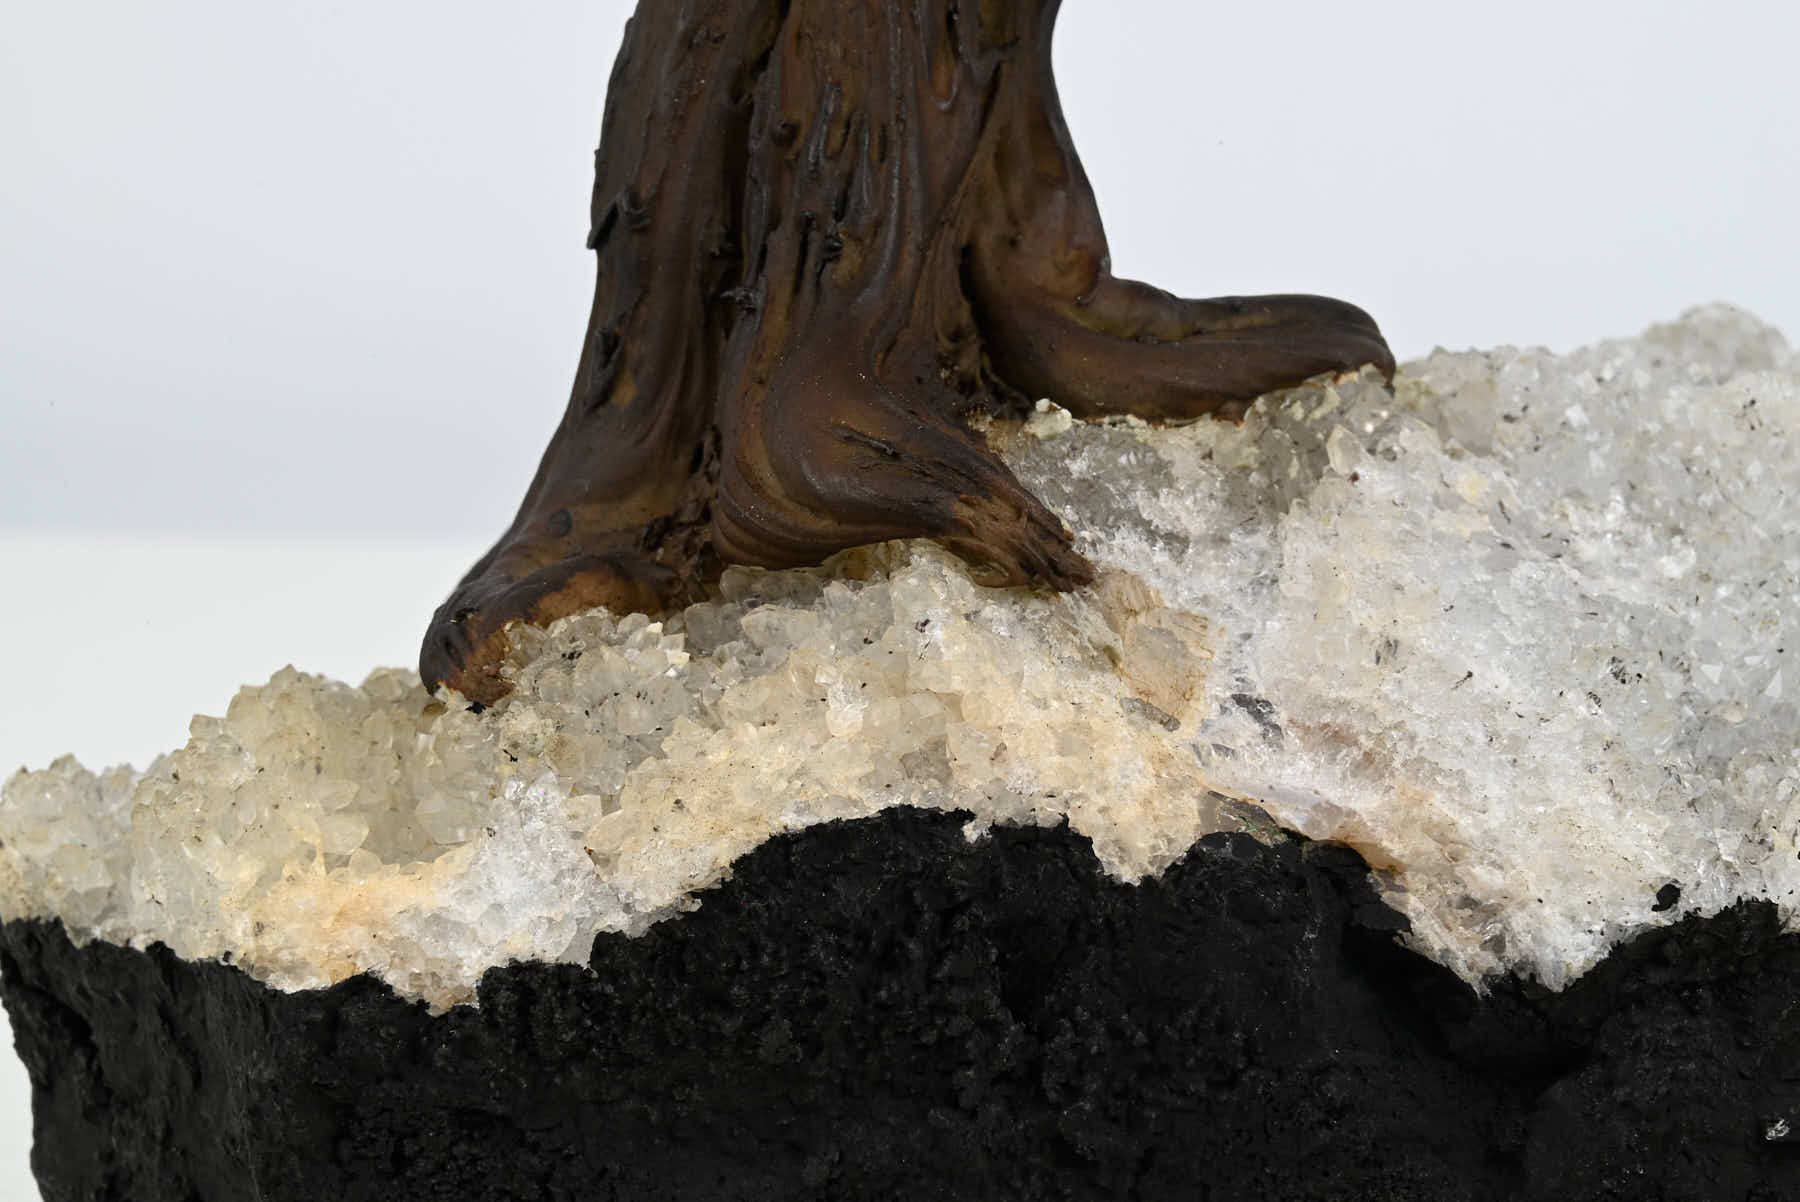 Handmade 37cm Tall Gemstone Tree with Amethyst base and 180 Rose Quartz gems - #TRROSE-36001